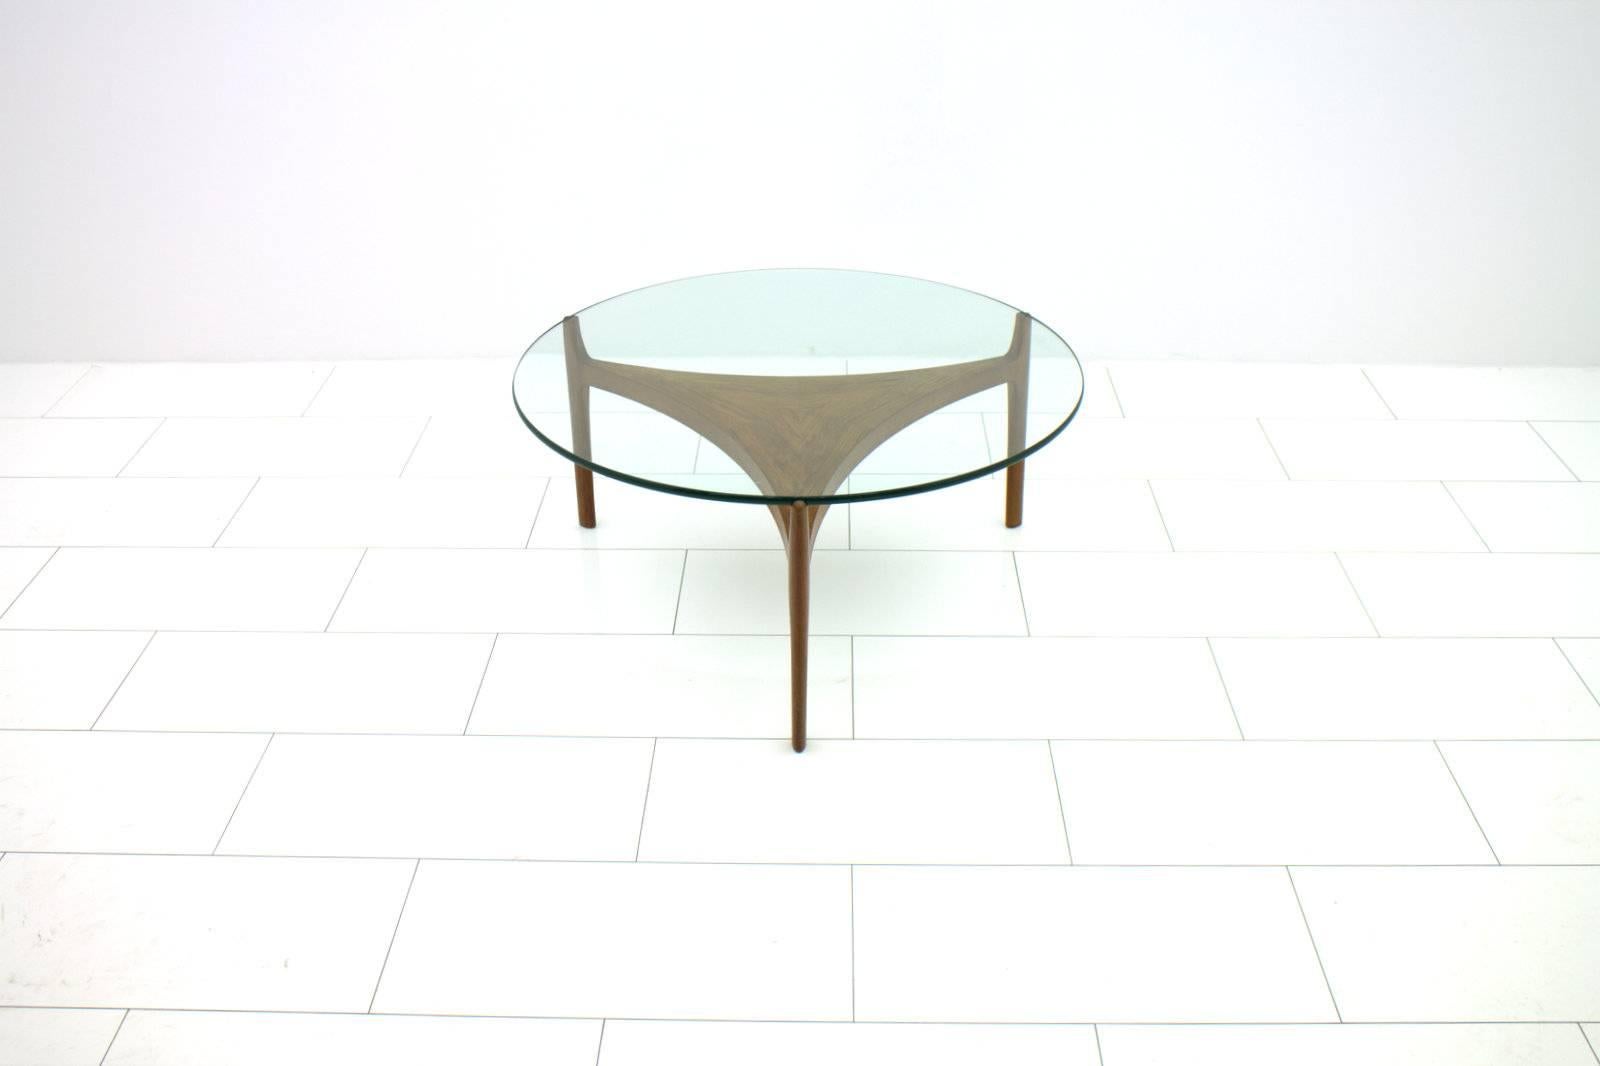 Sven Ellekaer Teak Wood and Glass Coffee Table, Denmark, 1960s For Sale 1